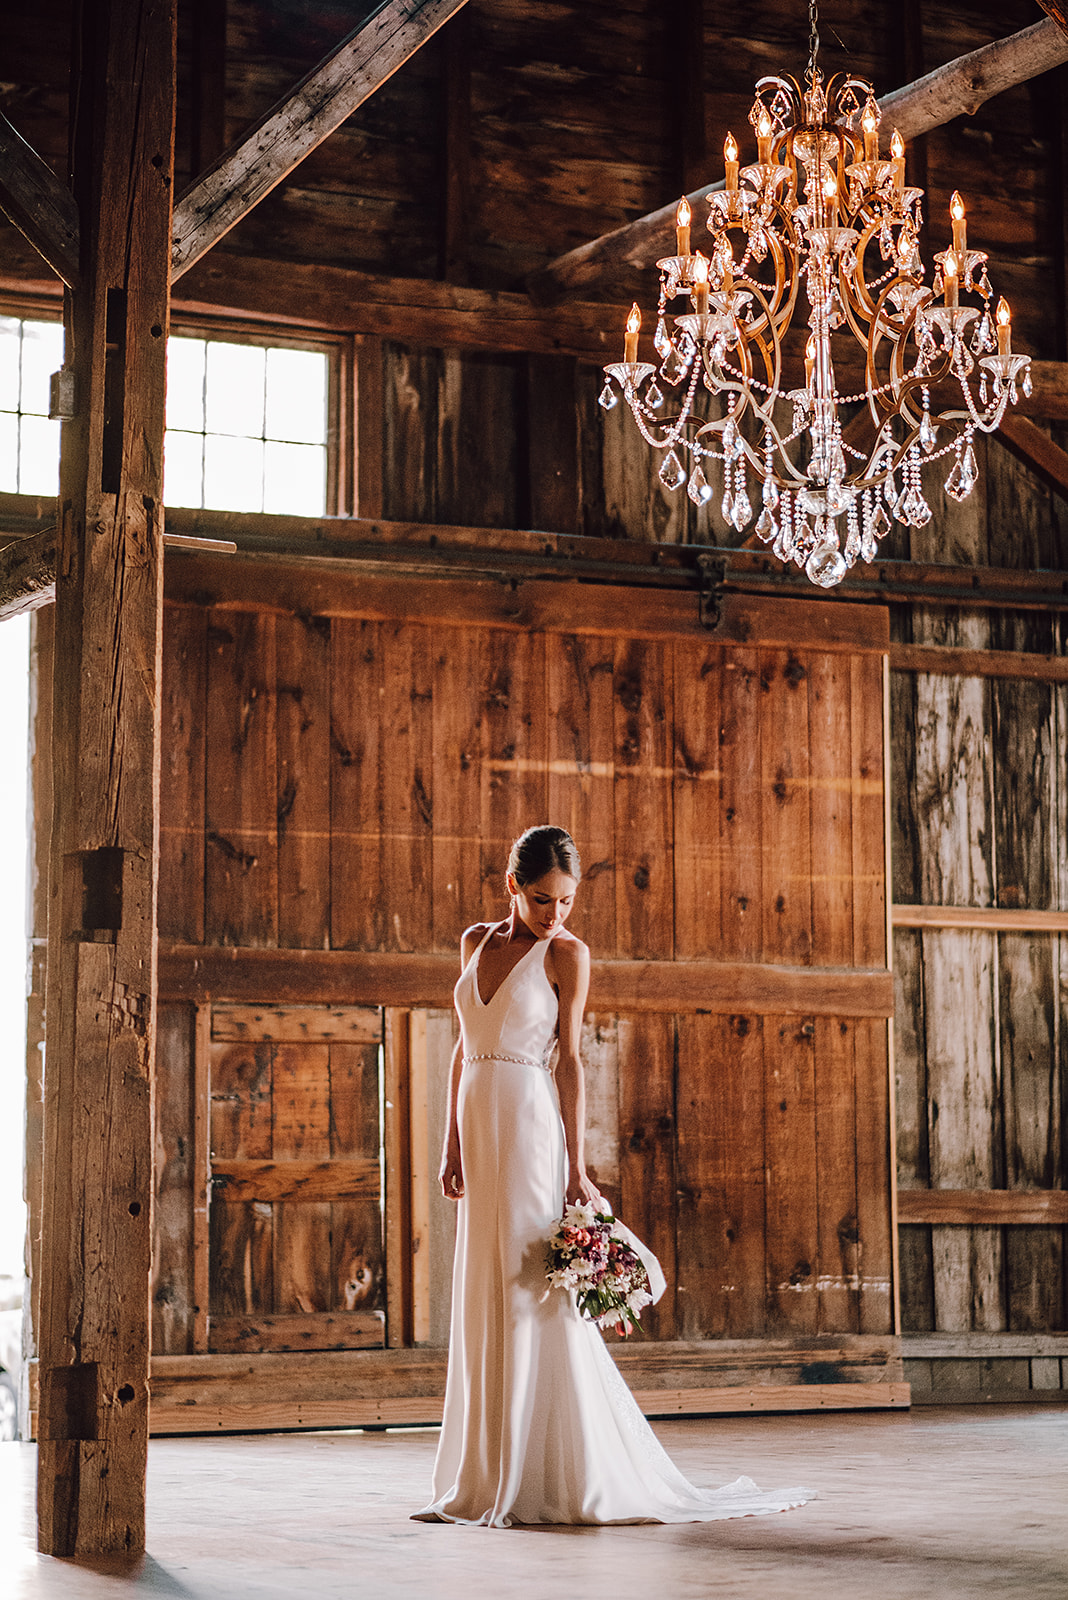 A barn wedding at Bear Mountain Inn at Waterford, Maine. Molly Breton & Co.